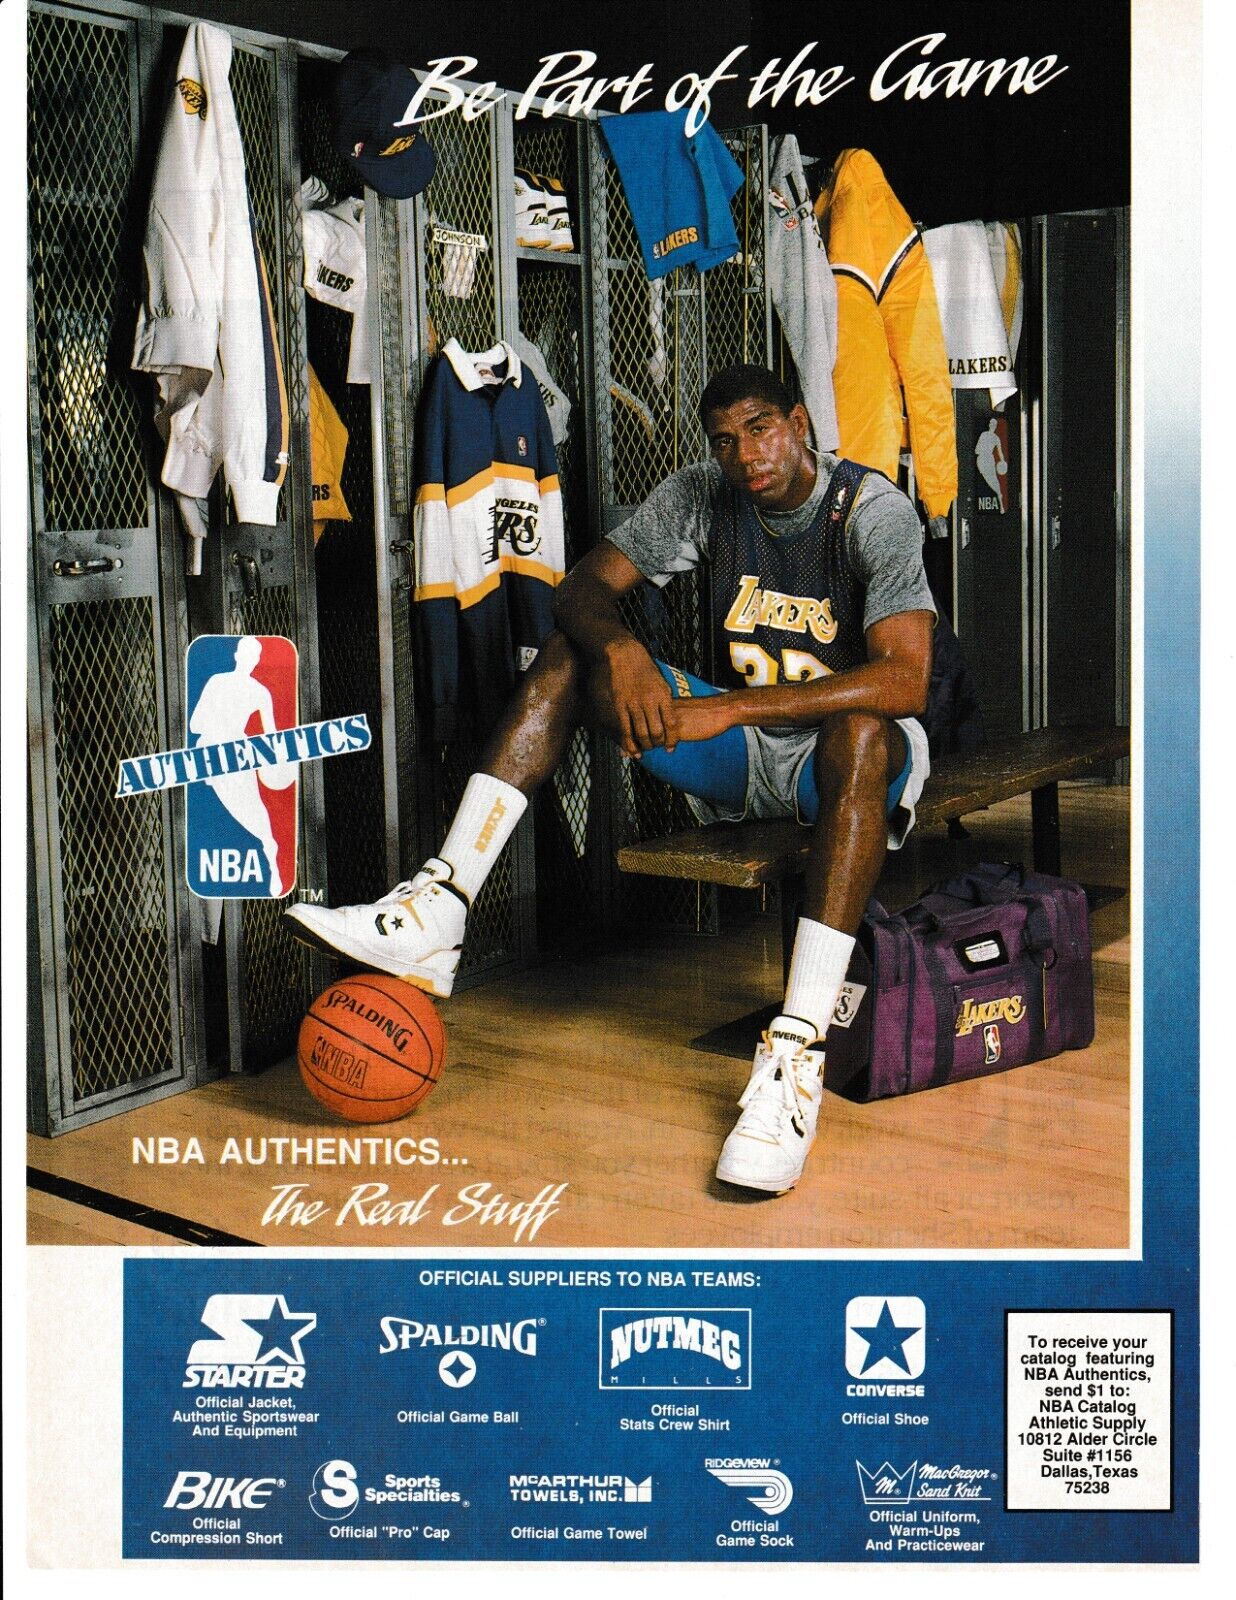 NBA Authentics Print Ad 1990 LA Lakers Basketball Player